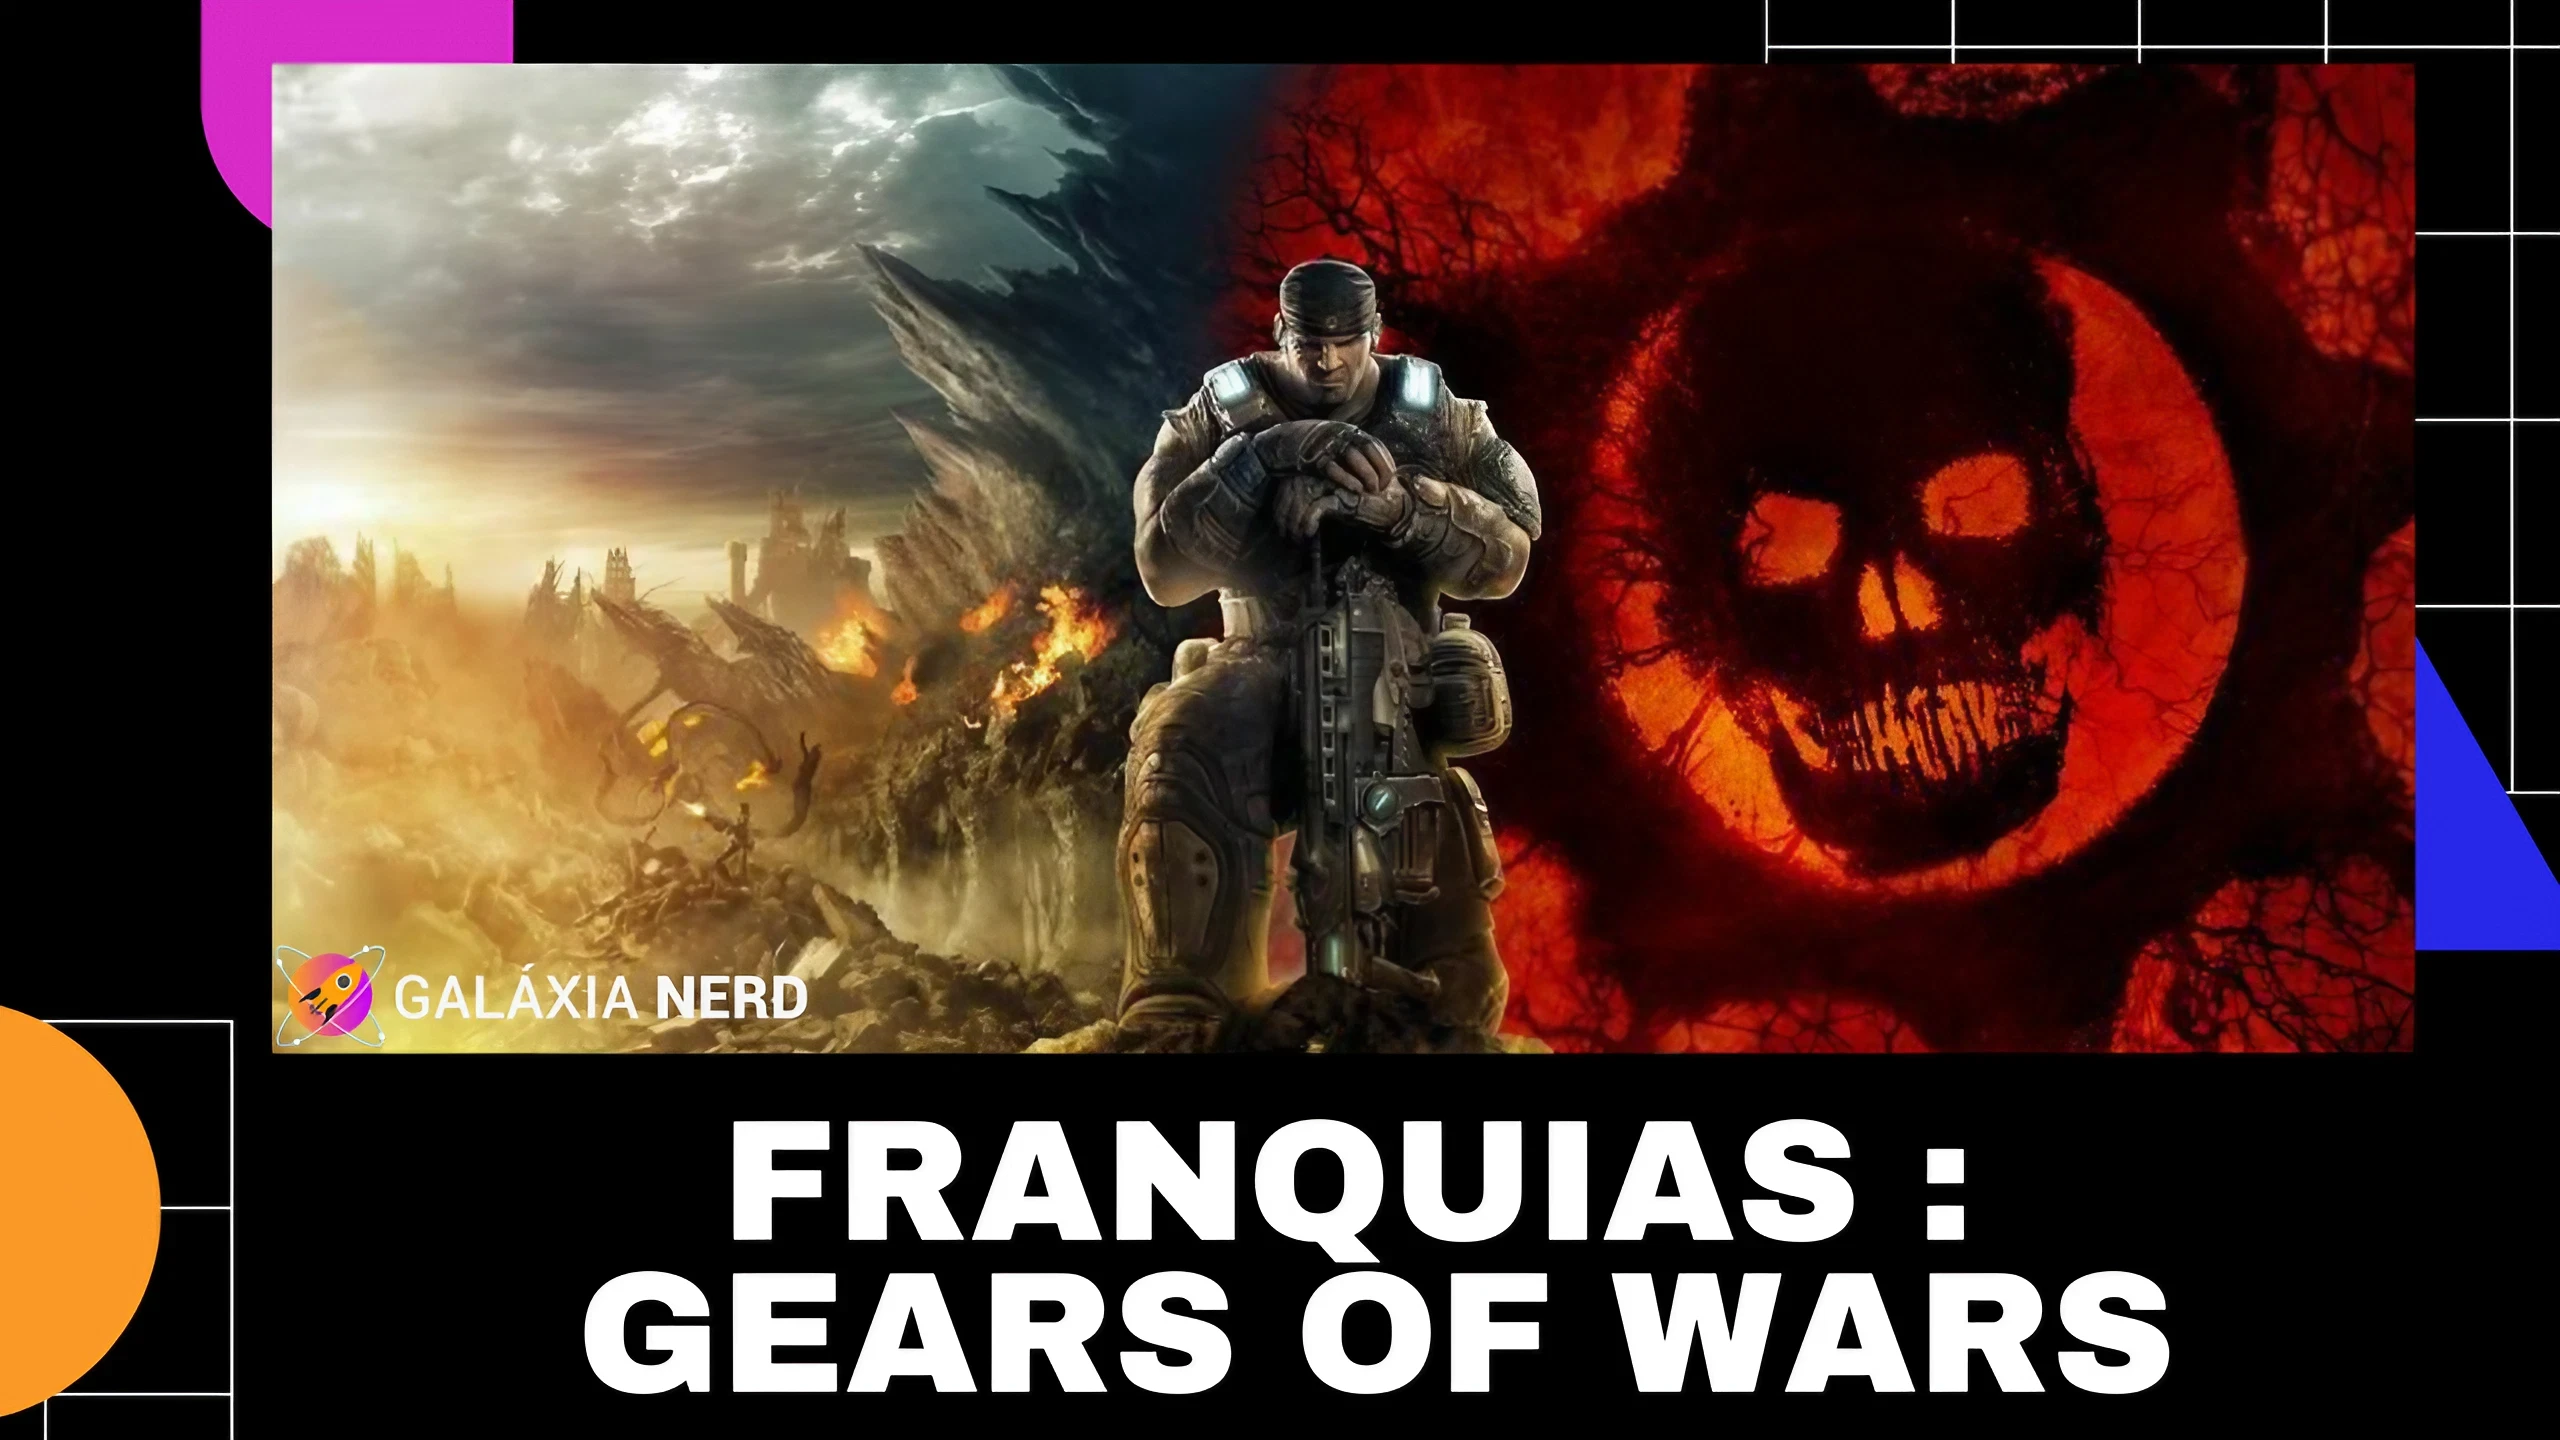 Franquias - Gears of Wars, um exclusivo que alavancou o Xbox 22